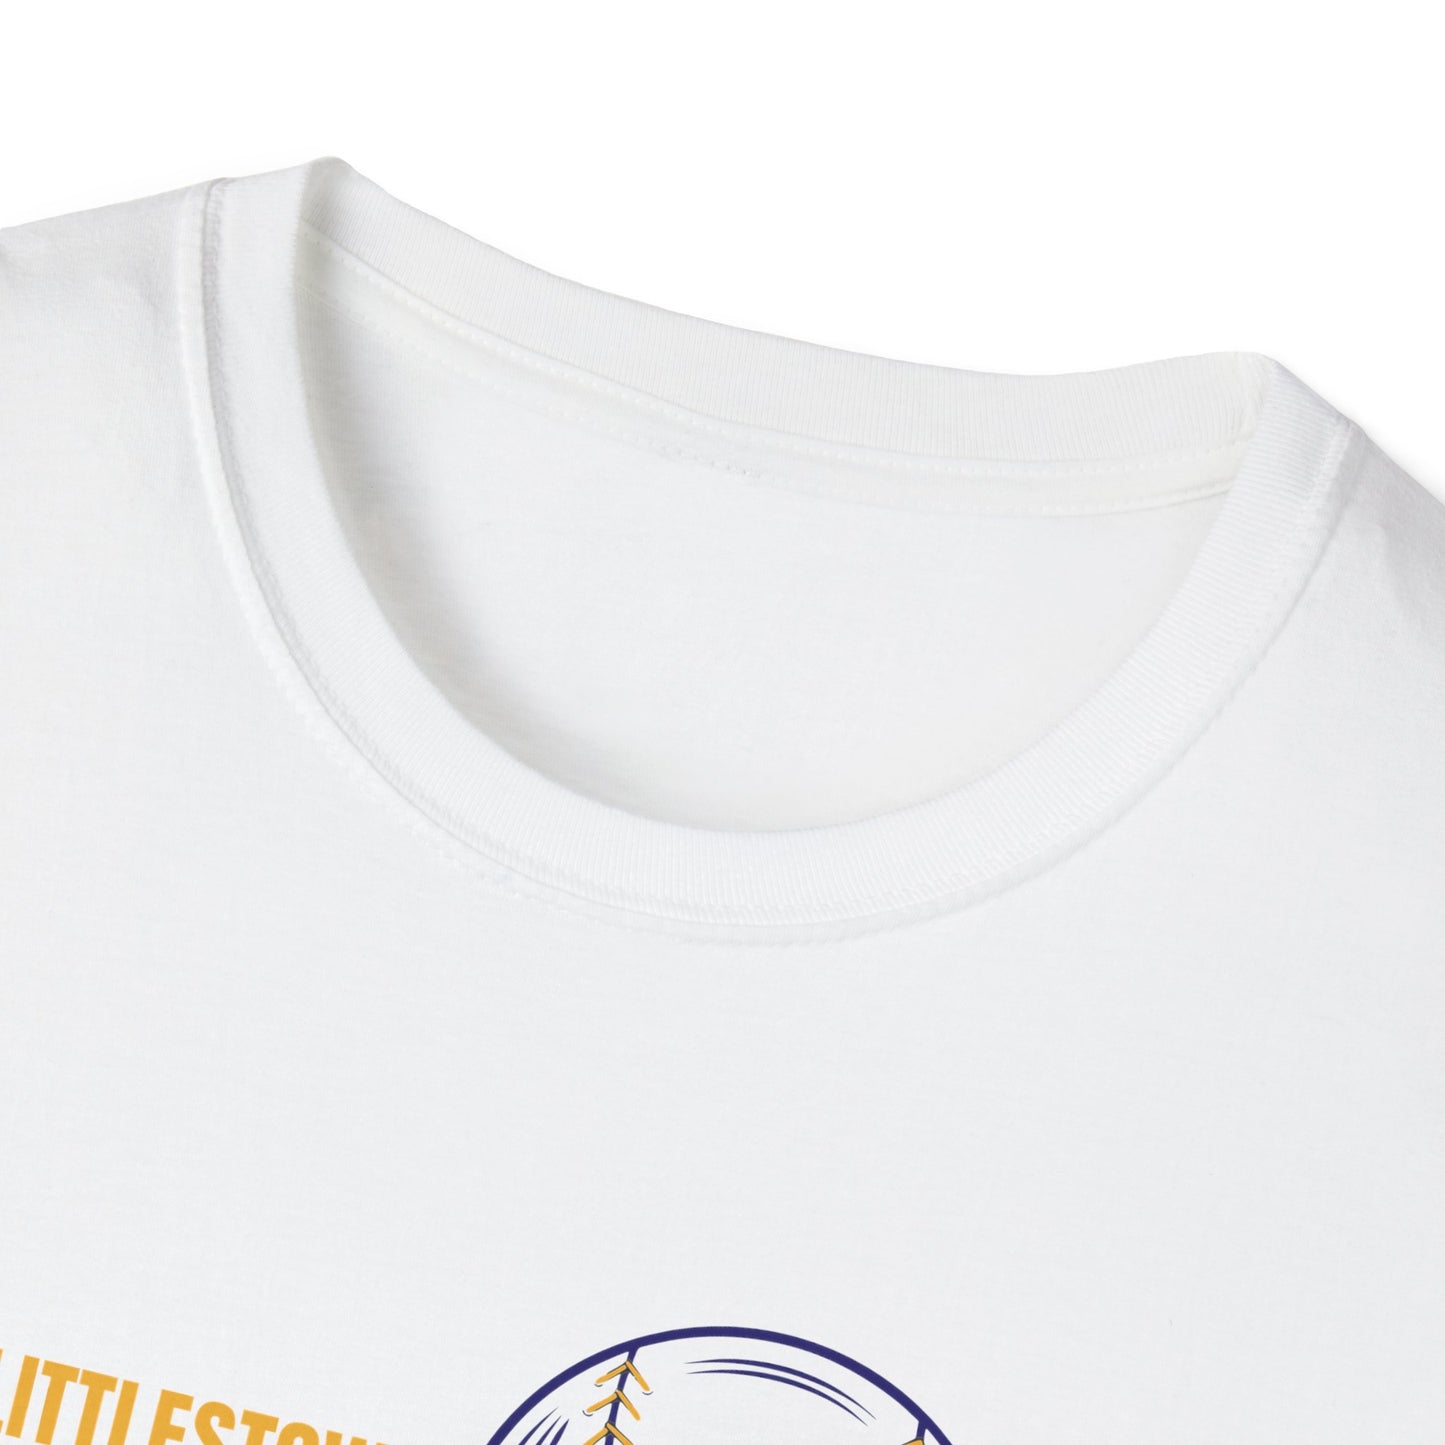 softball/baseball shirt UNISEX (softstyle)